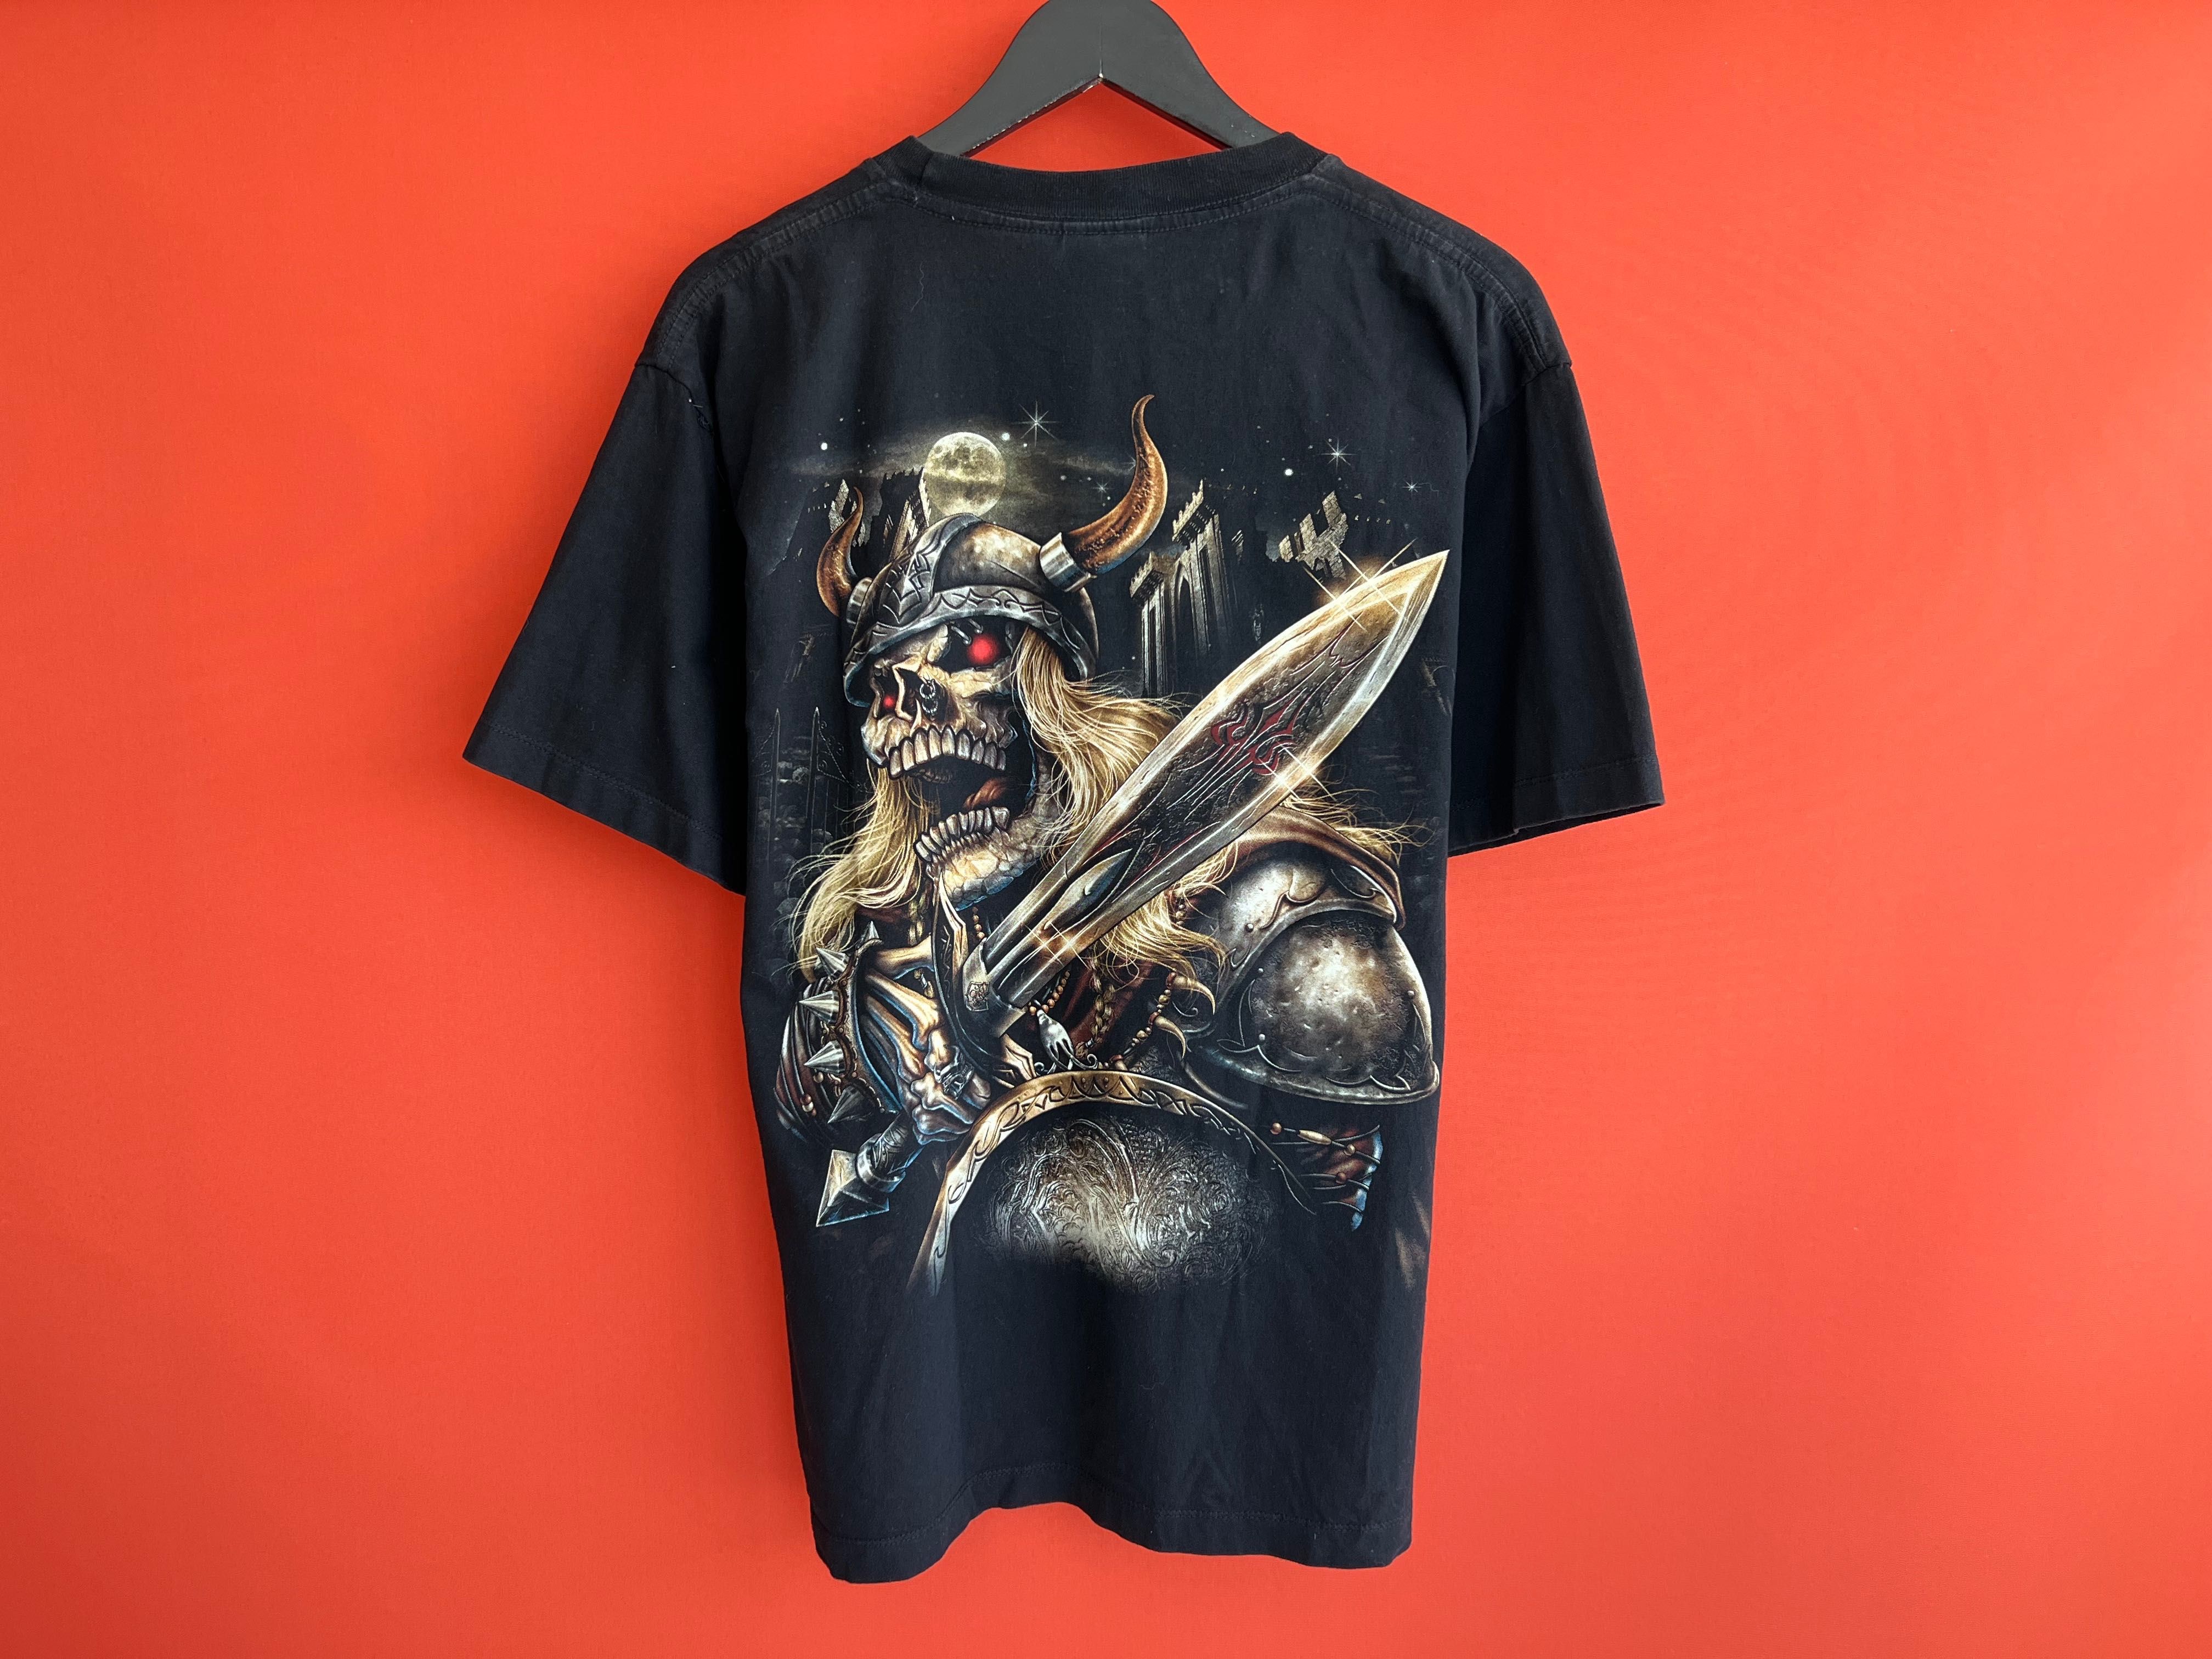 Wild Viking Skull Vintage Merch мужская футболка мерч размер L Б У